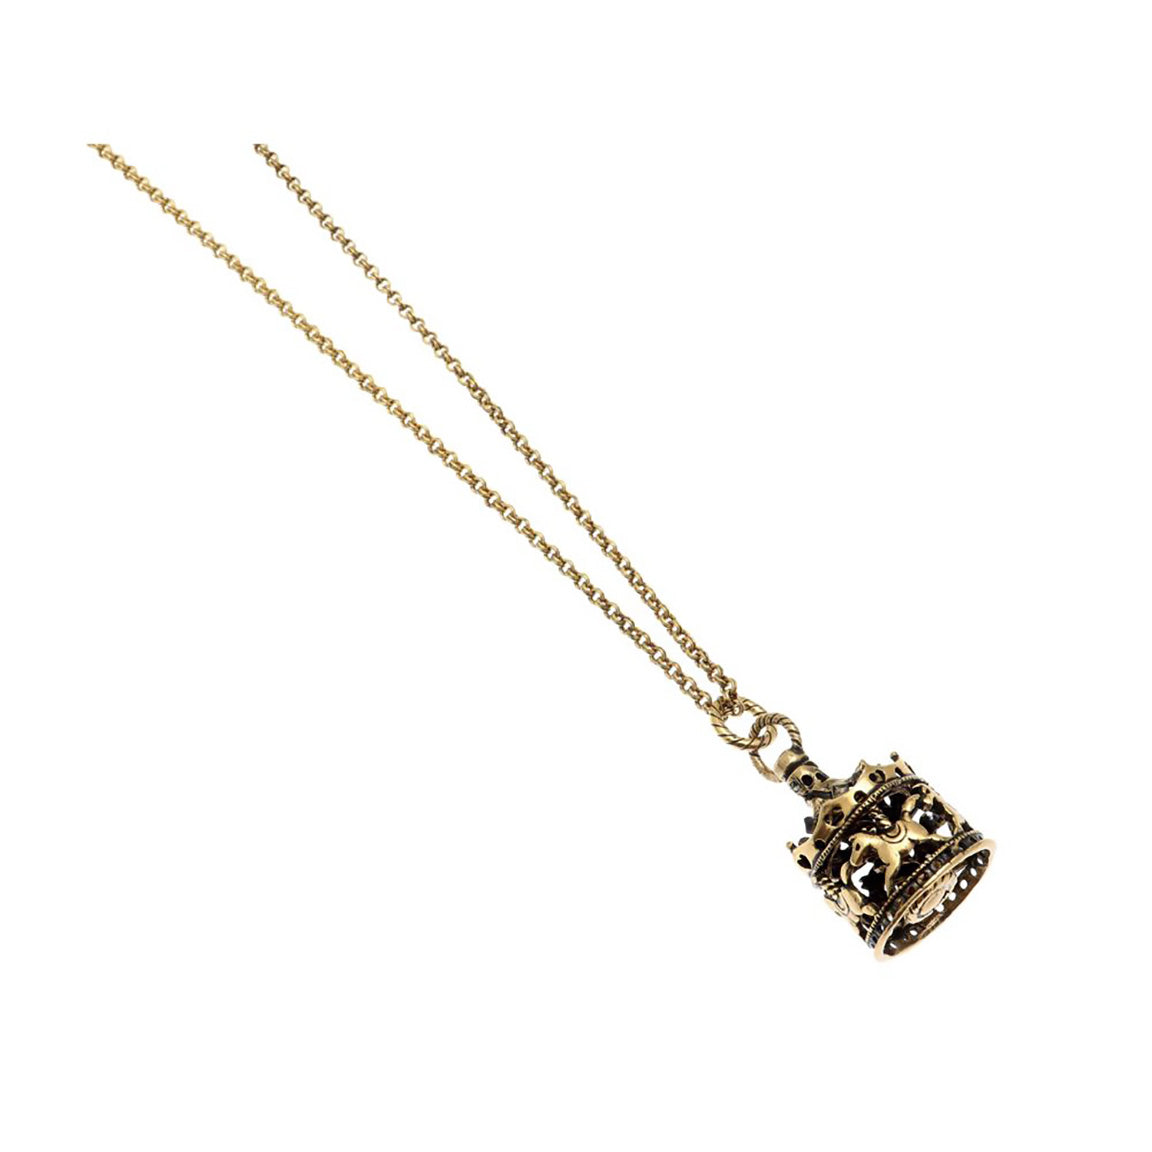 Alcozer Carousel Necklace: Garnets, Italian Design